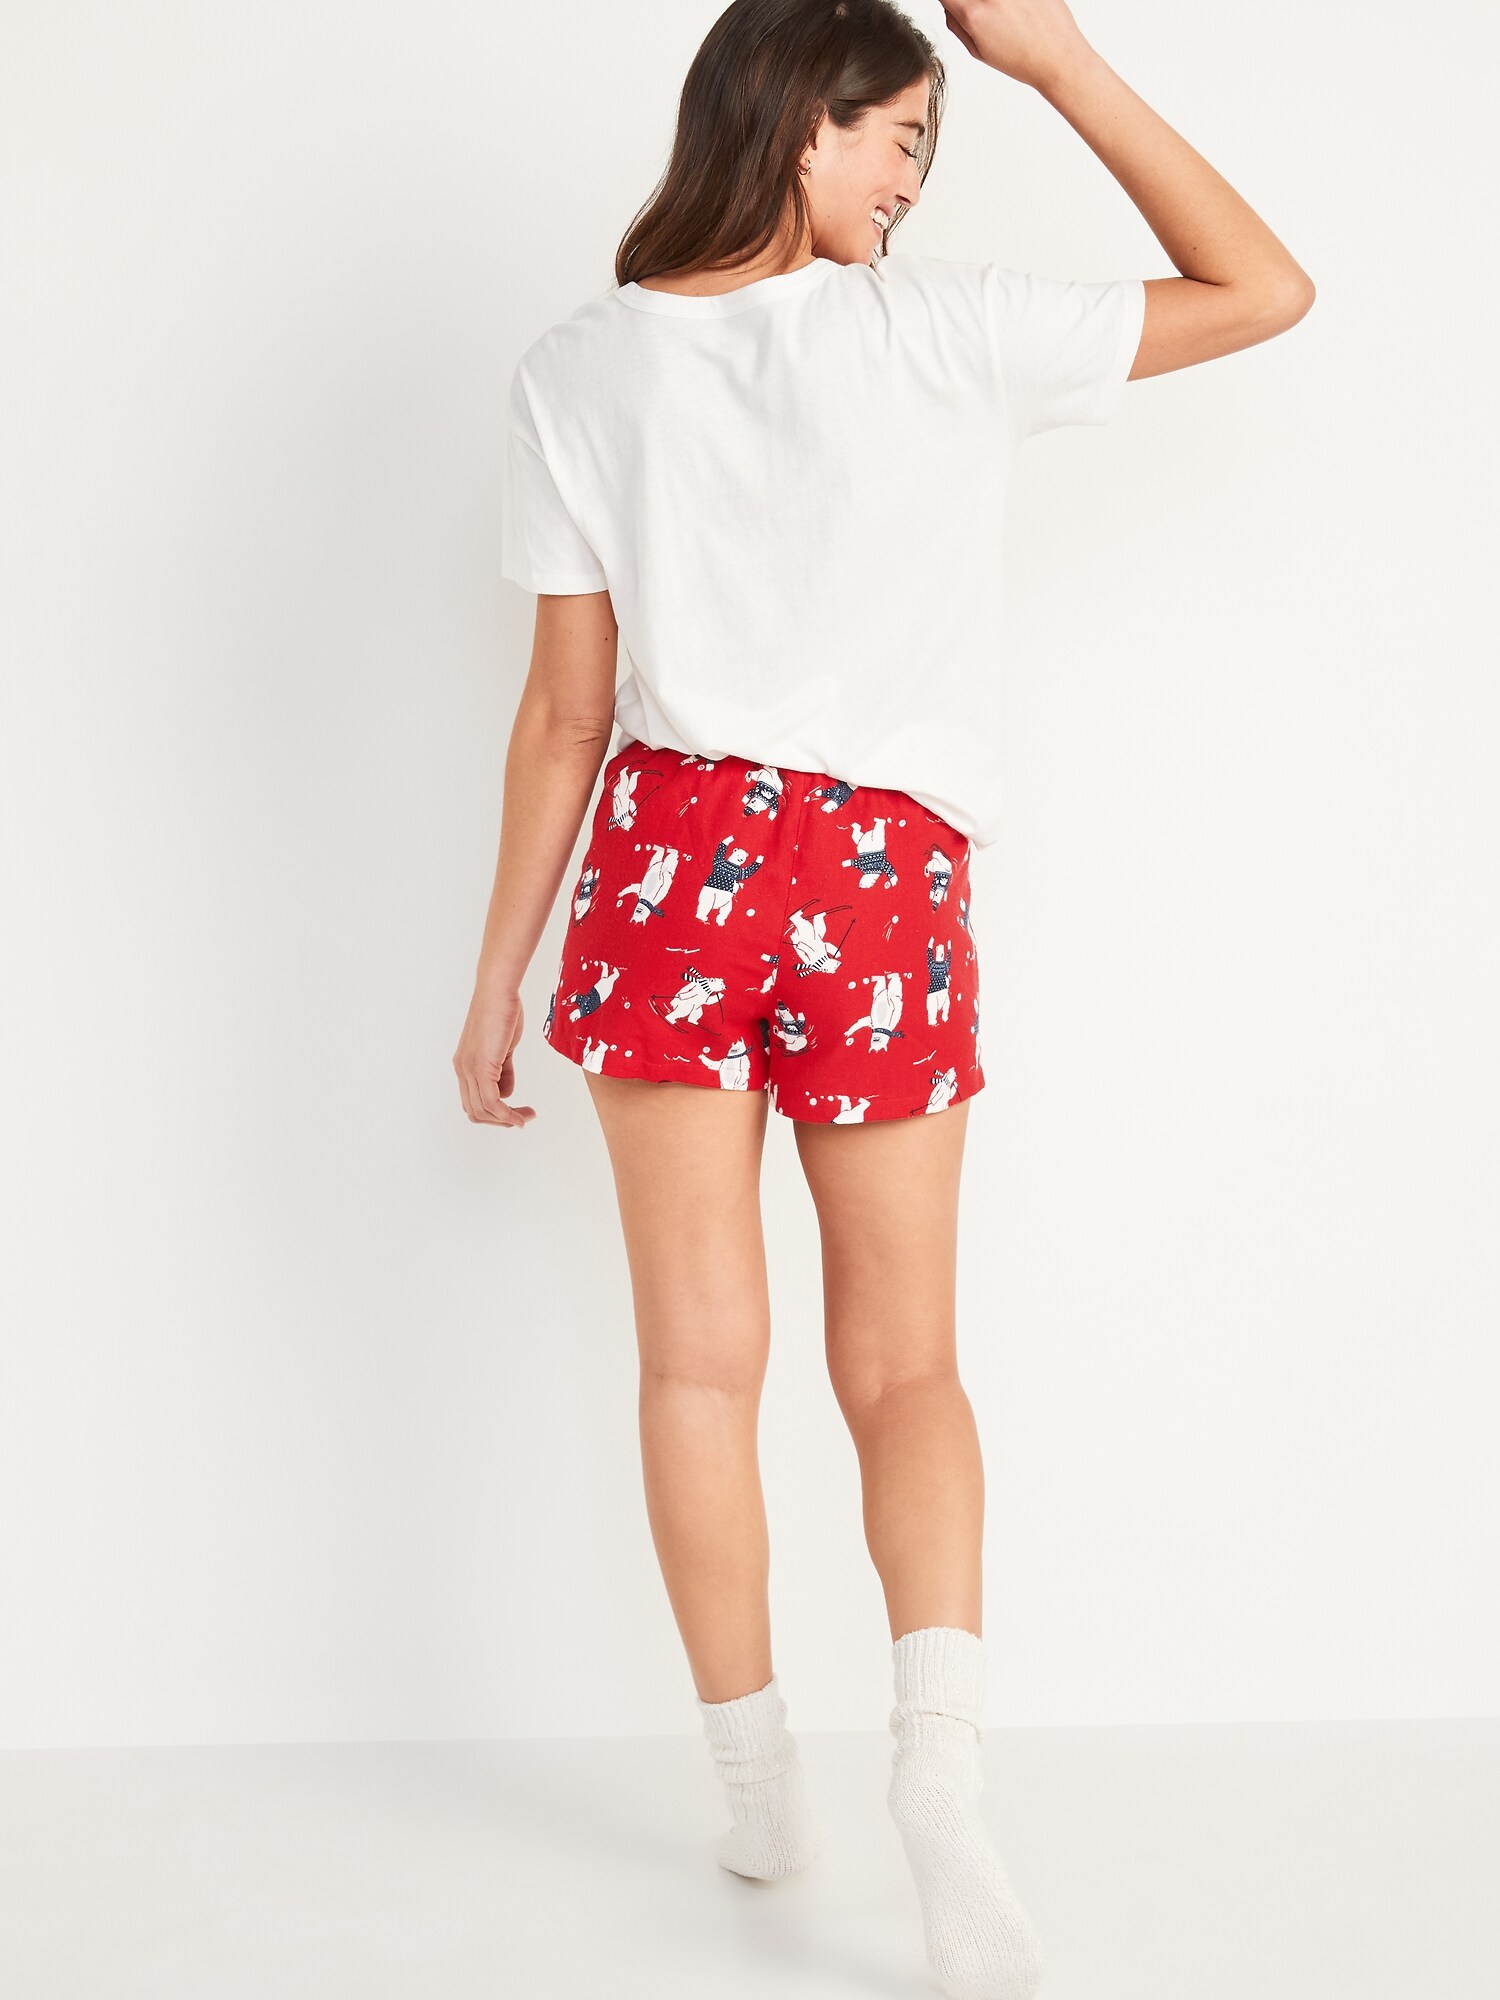 Ladies Topshop Pyjamas Size 10 White T Shirt Red Check Shorts